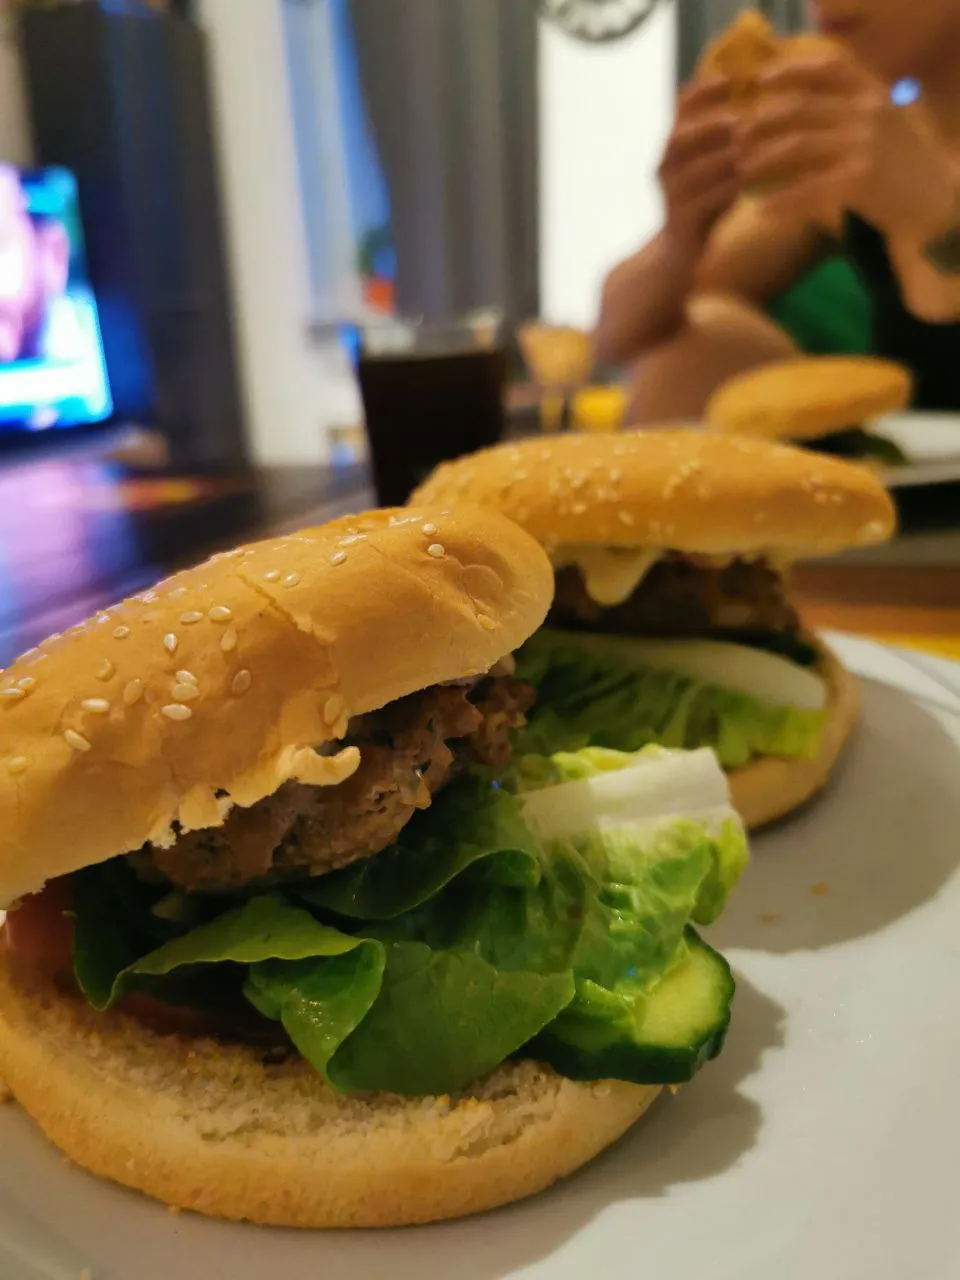 selfmade burgers at home.jpg